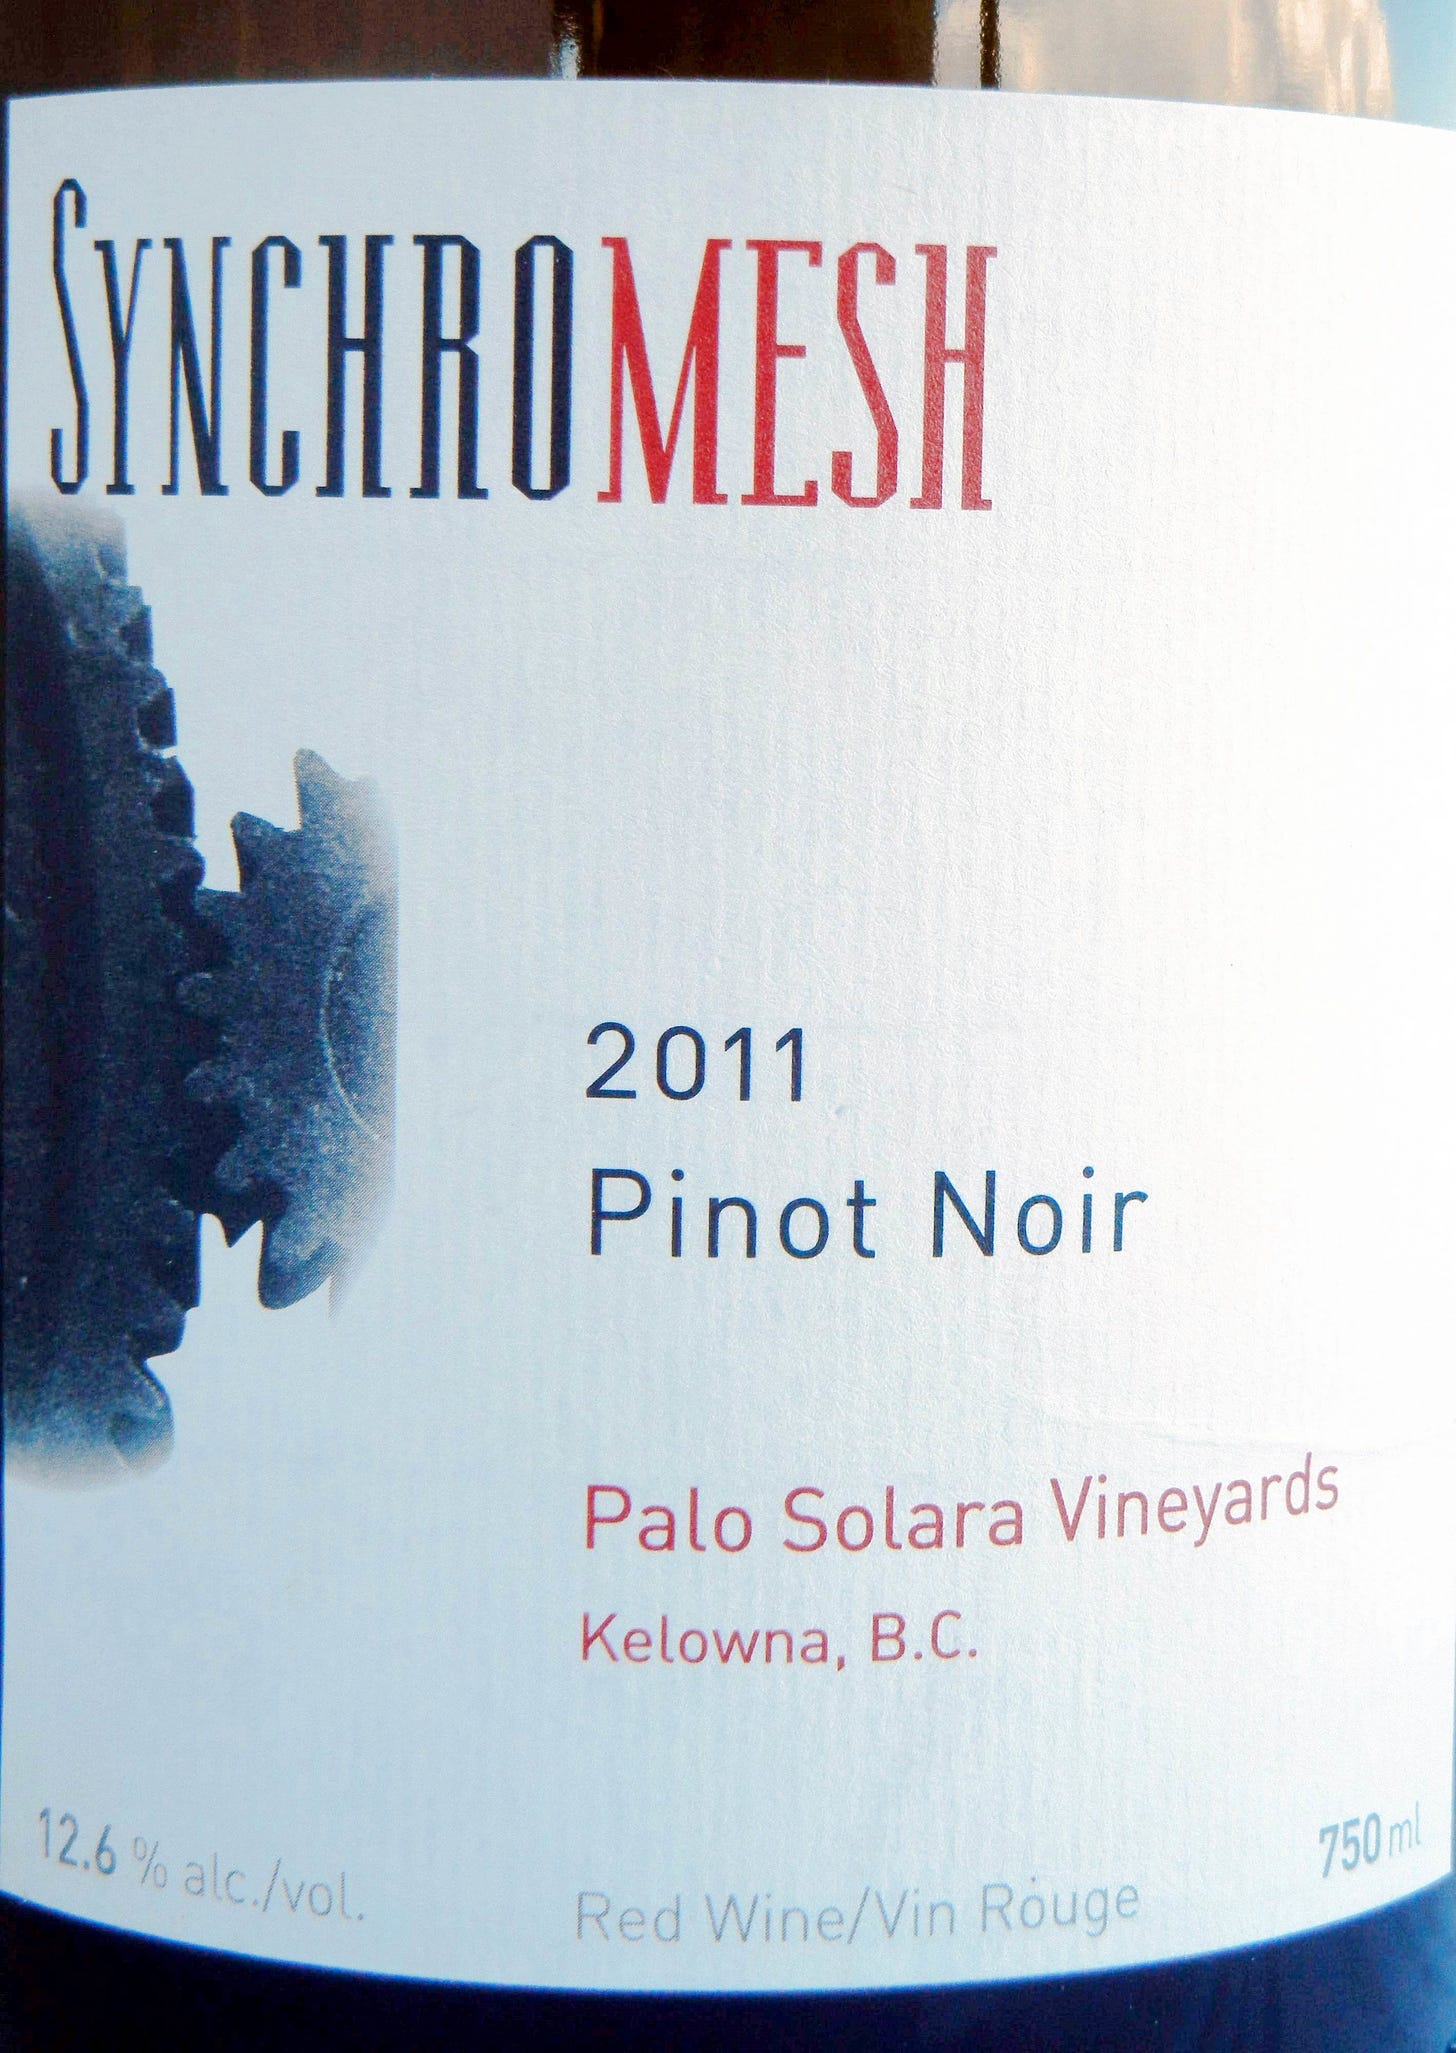 Synchromesh Palo Solara Pinot Noir 2011 Label - BC Pinot Noir Tasting Review 13